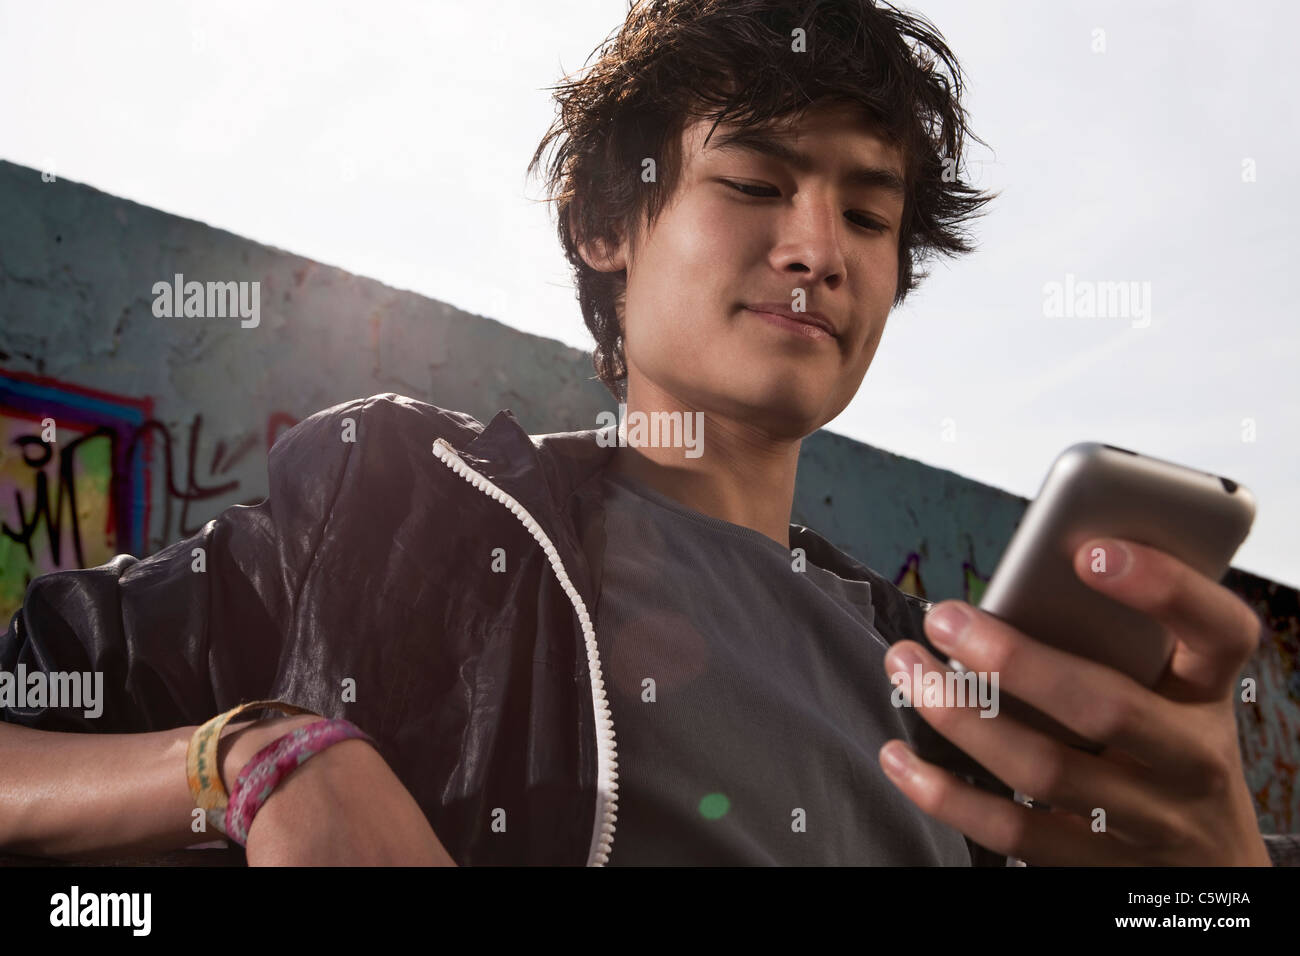 Germany, Berlin, Teenage boy using mobile phone Stock Photo